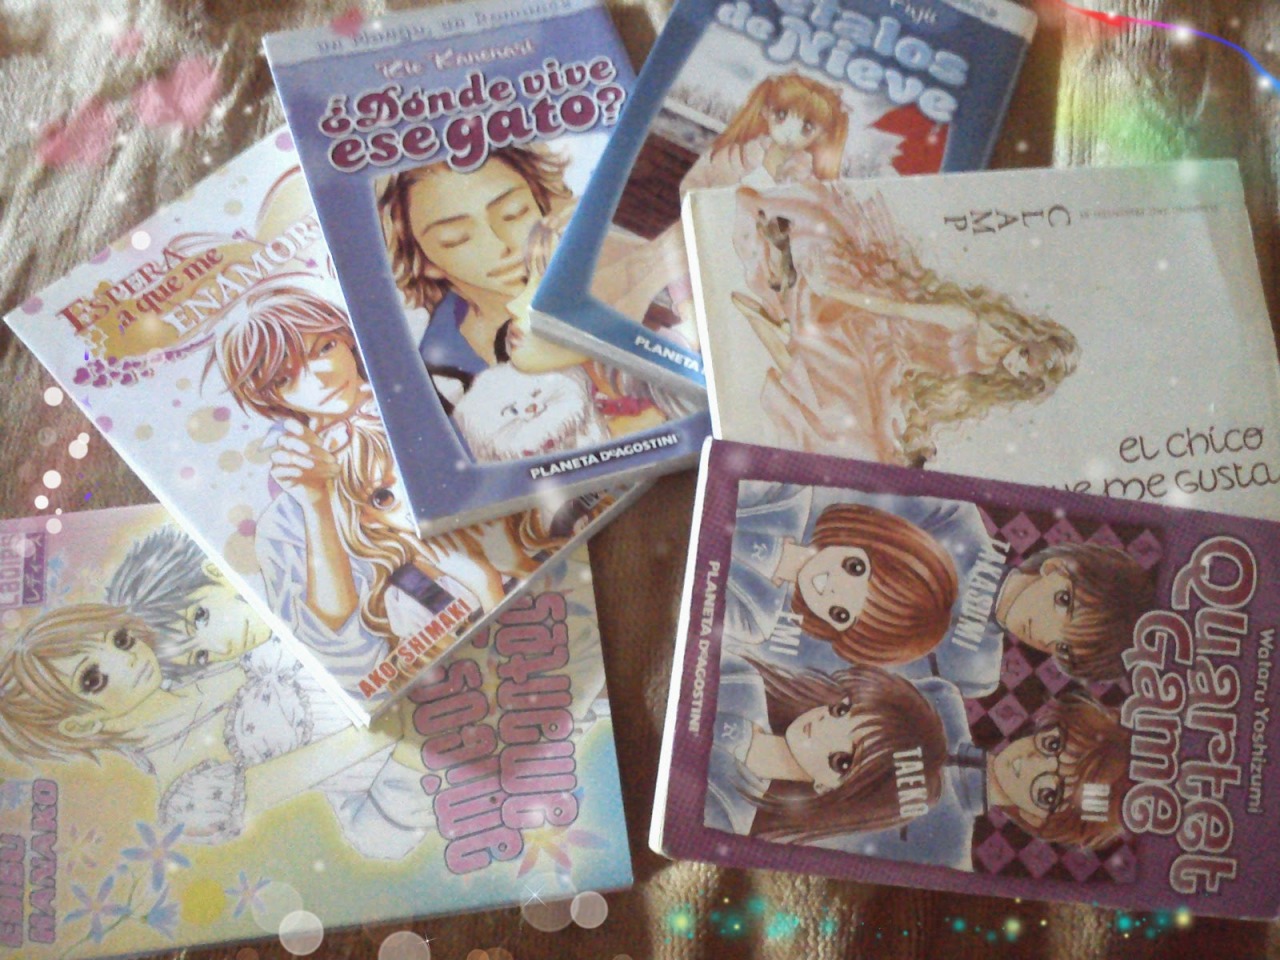 ♥Anime&Manga♥ Mi colección de Shōjo 少女 1ºParte
http://harajukuspain.blogspot.com.es/2015/05/anime-mi-coleccion-de-shojo-1parte.html